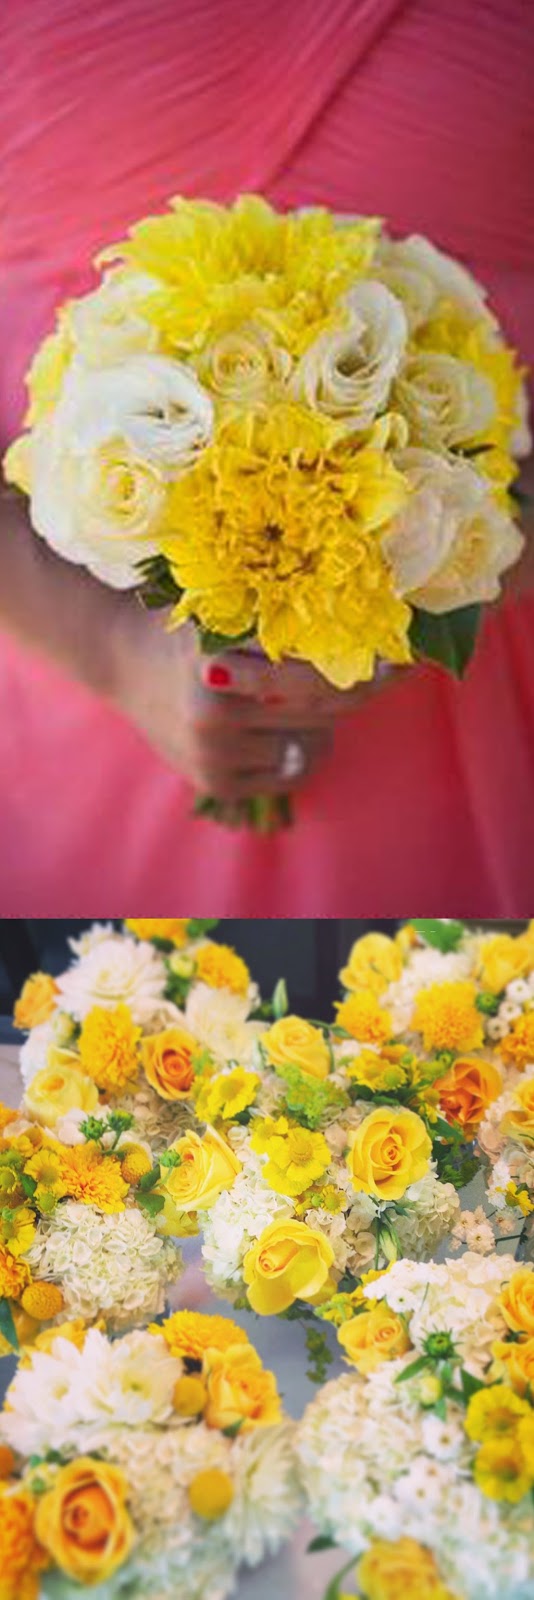 Yellow lisianthus wedding flowers